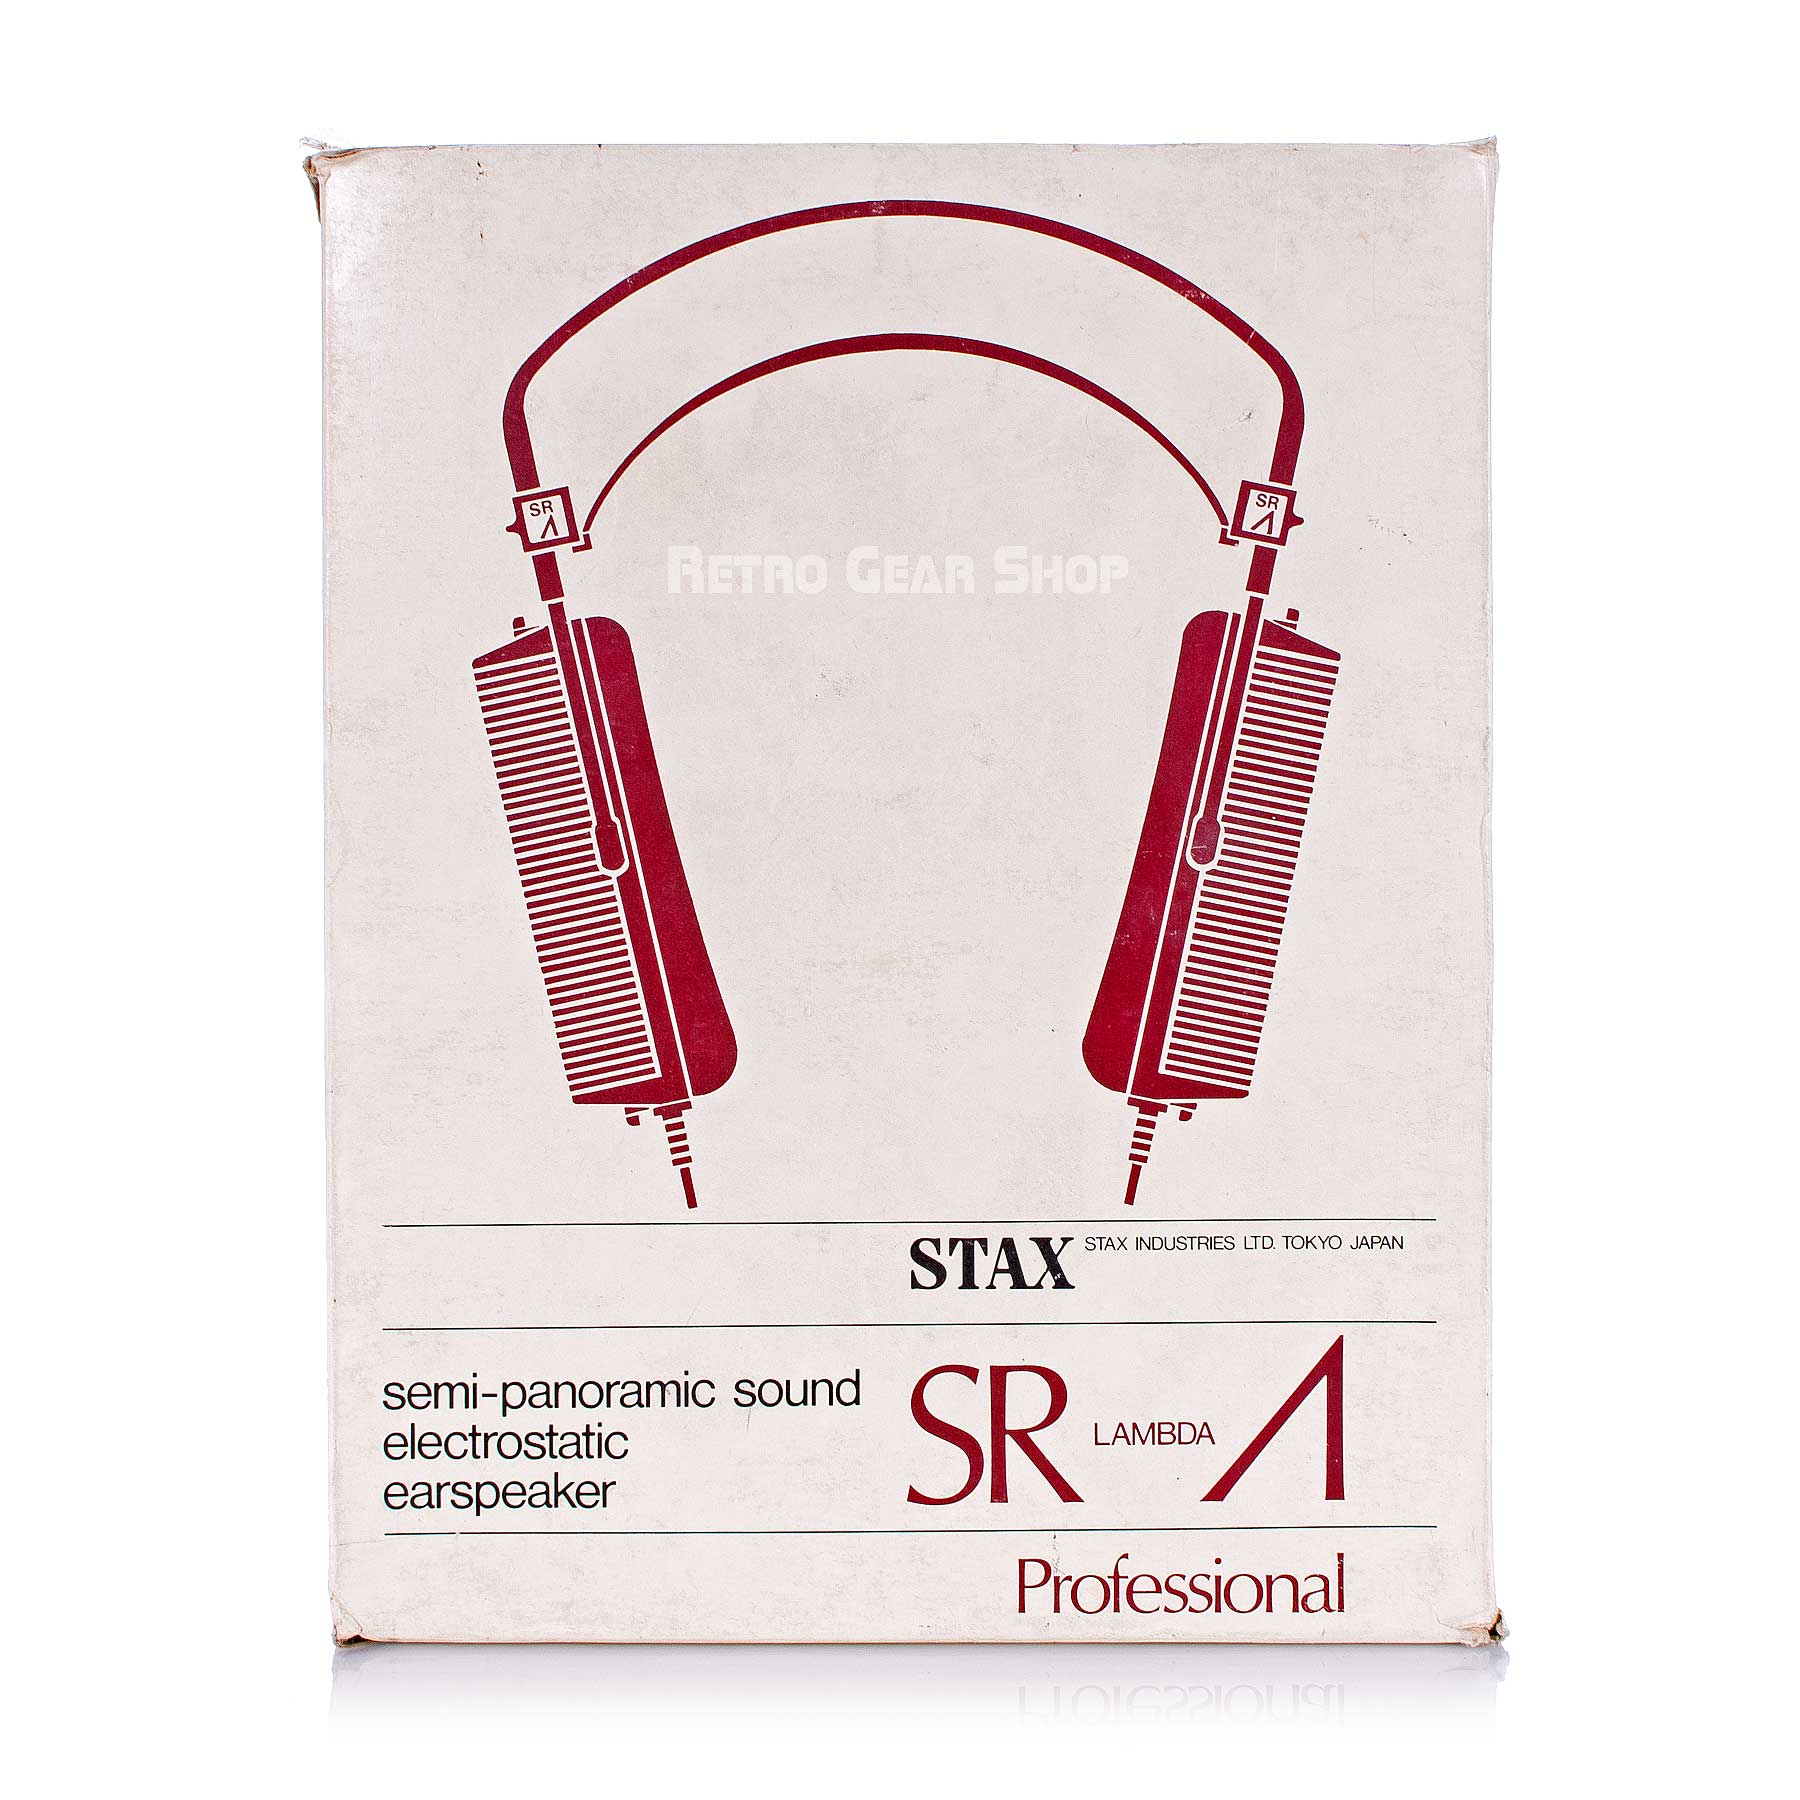 Stax SR Lamda Professional Headphones Rare Vintage Semi-panoramic Sound Electrostatic Earspeaker Original Box #3